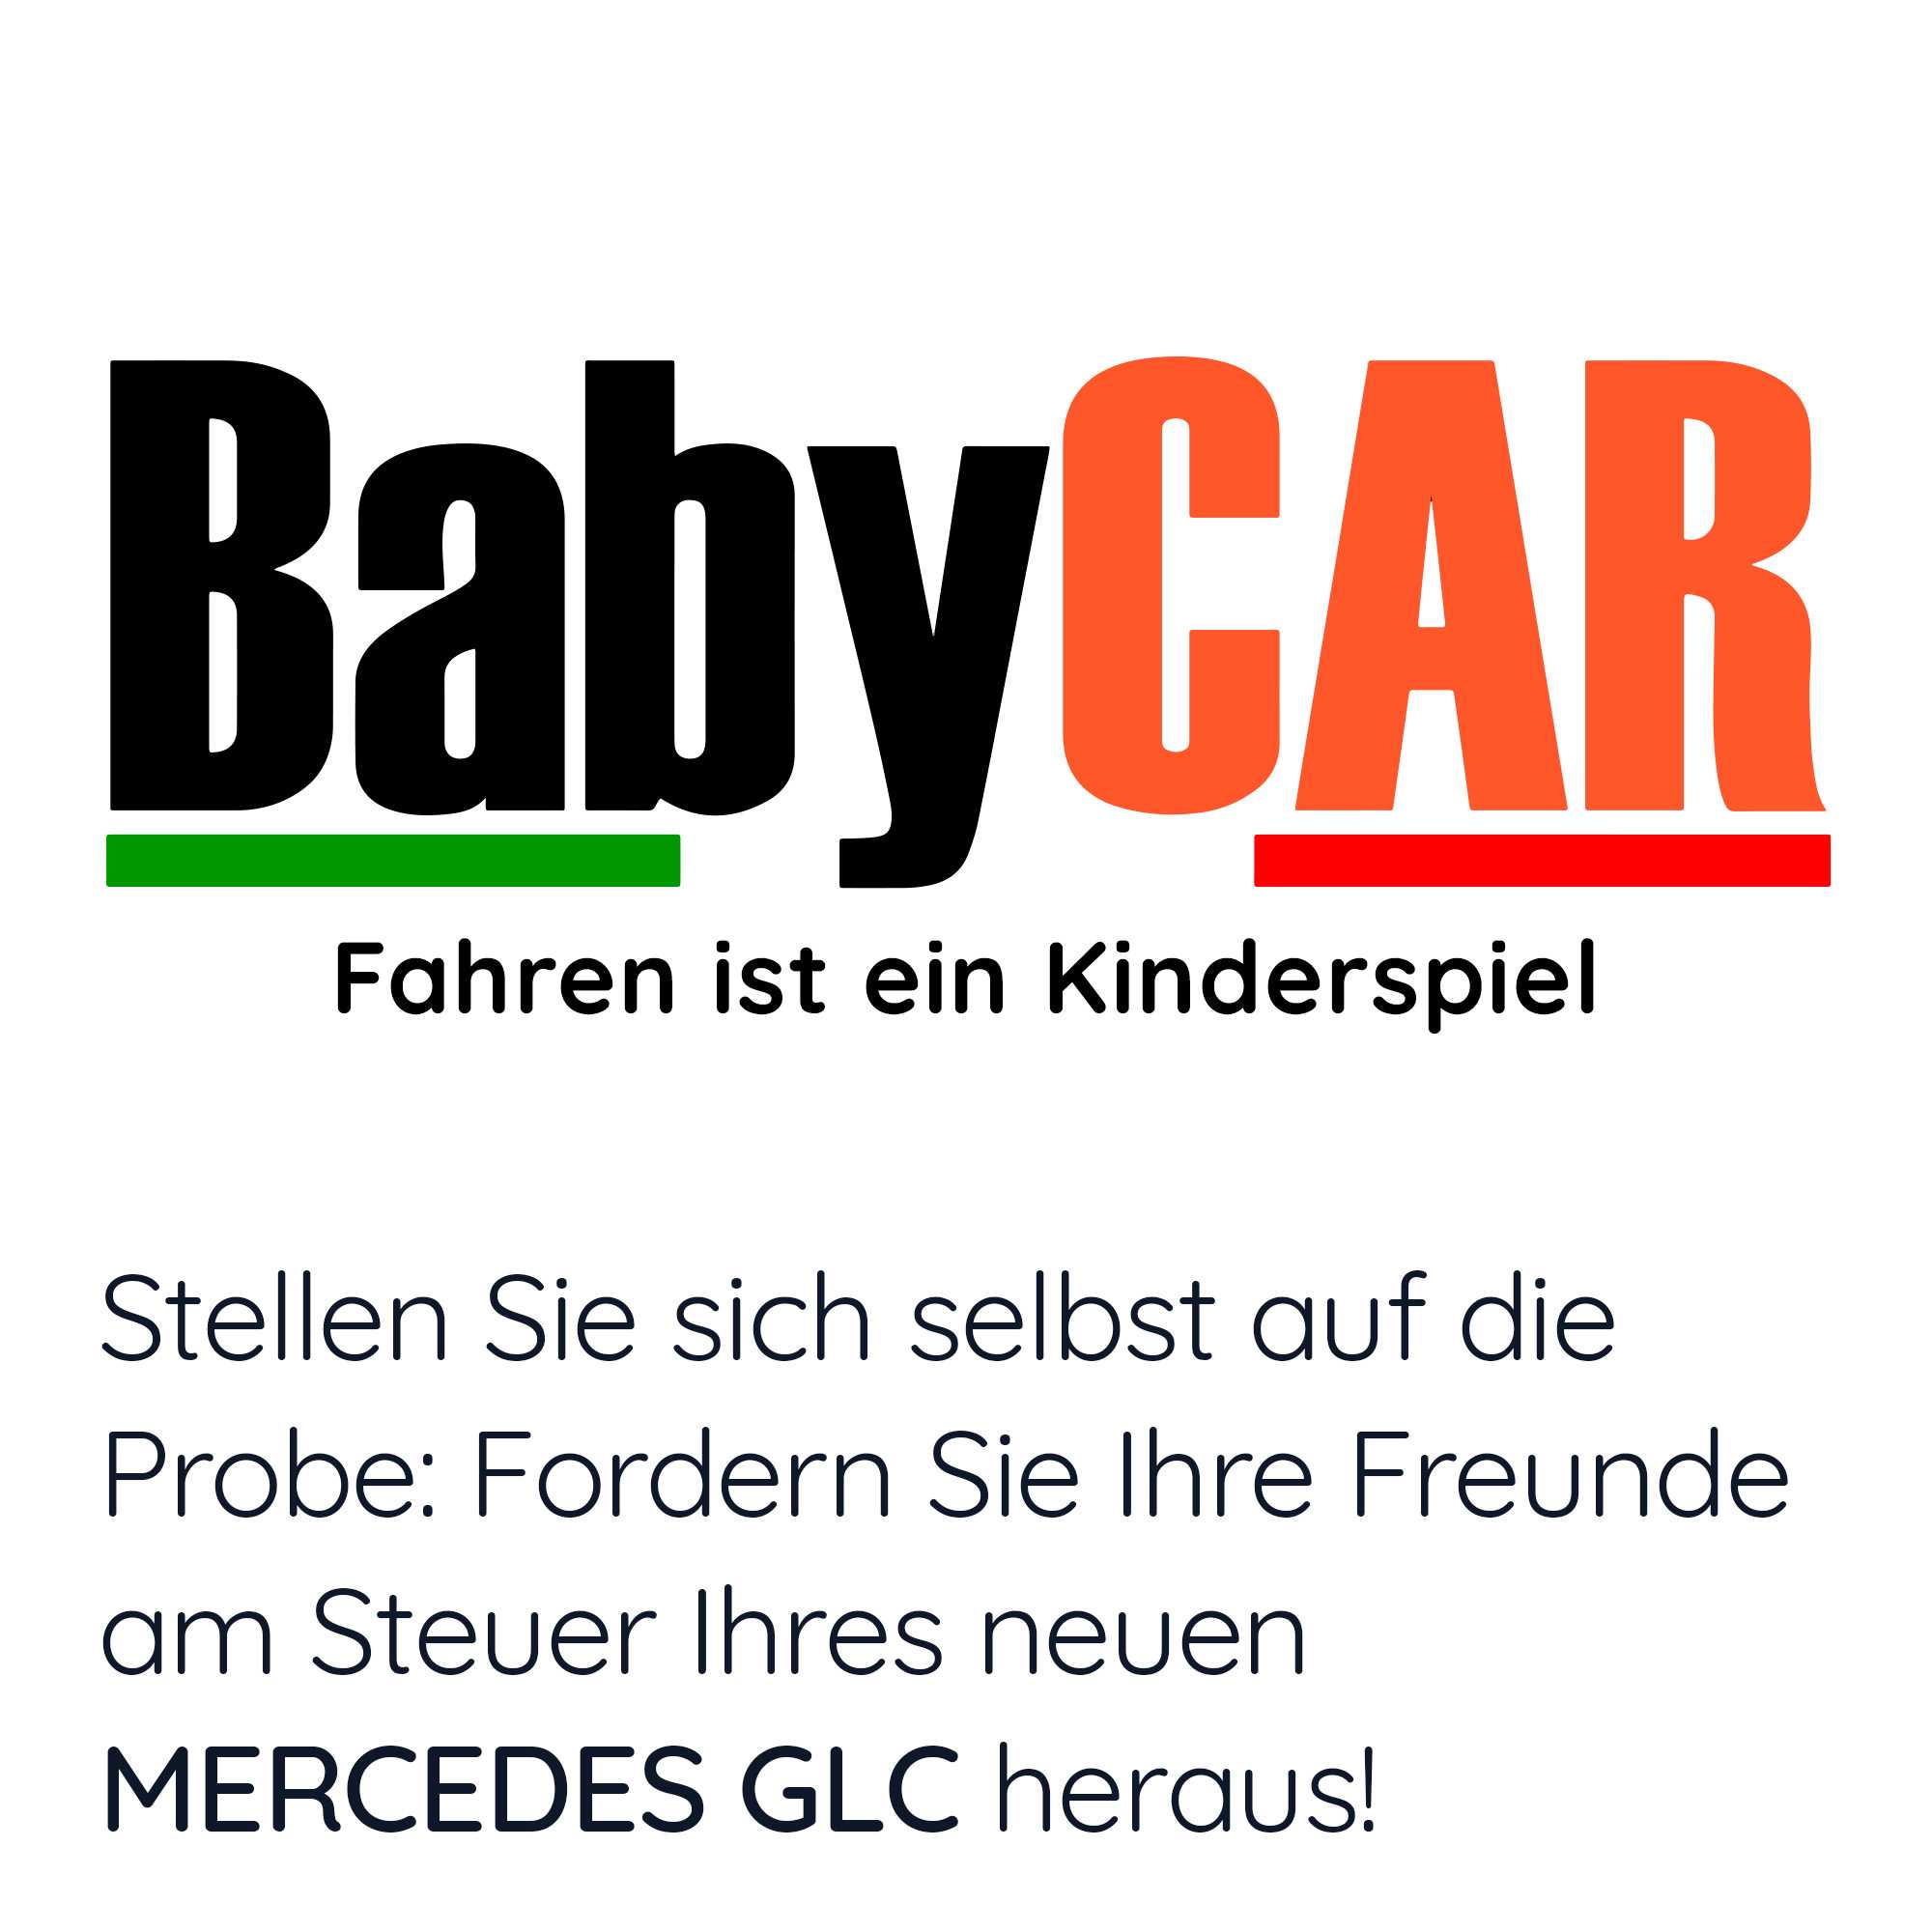 Mercedes GLC AMG Elektro - caption